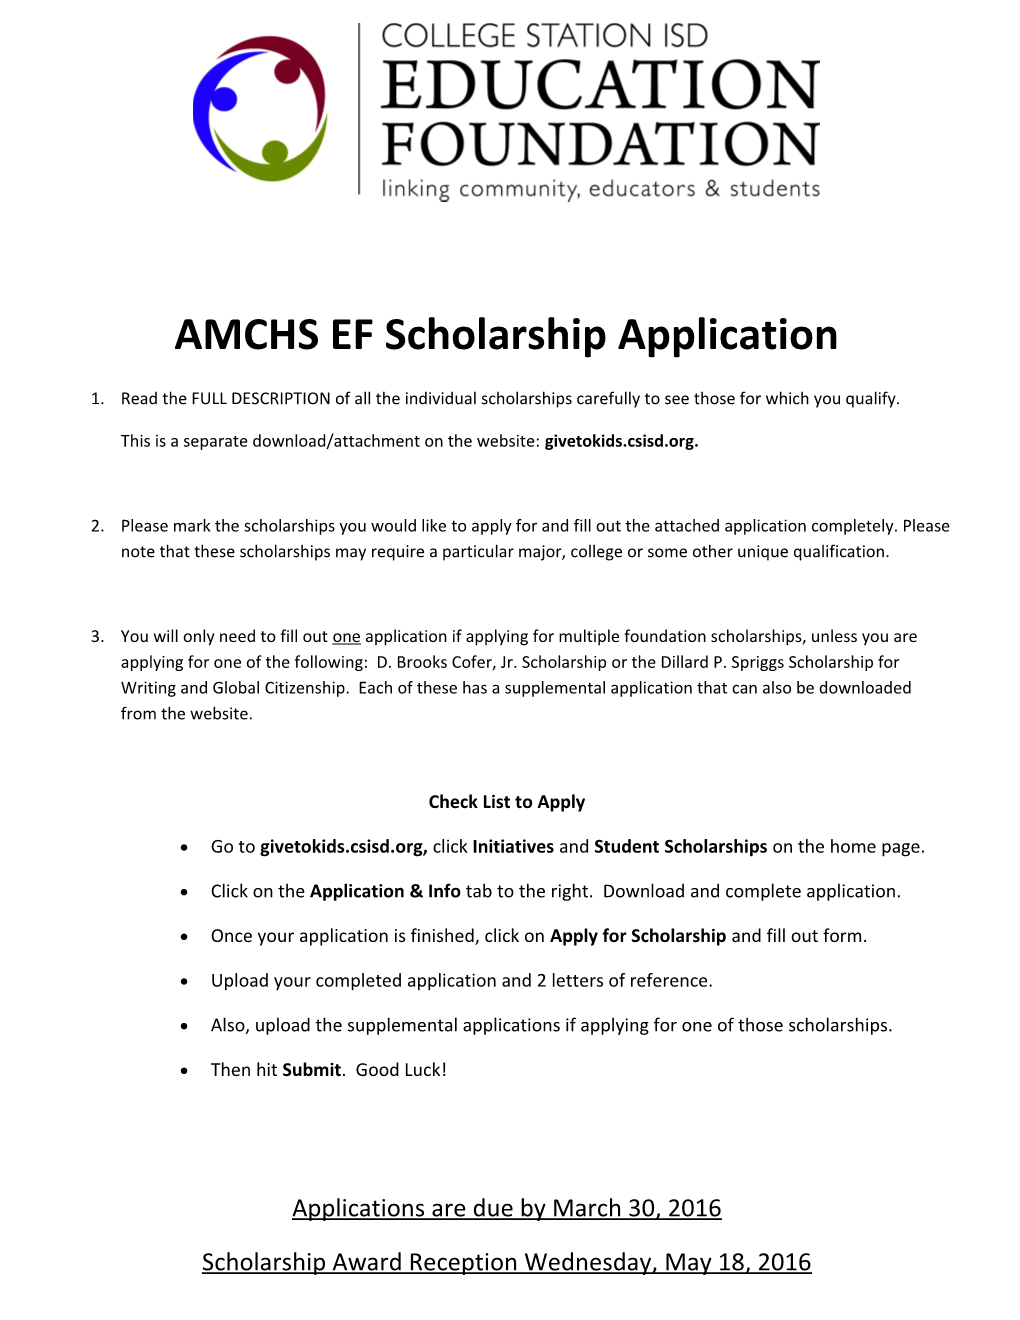 AMCHS EF Scholarship Application